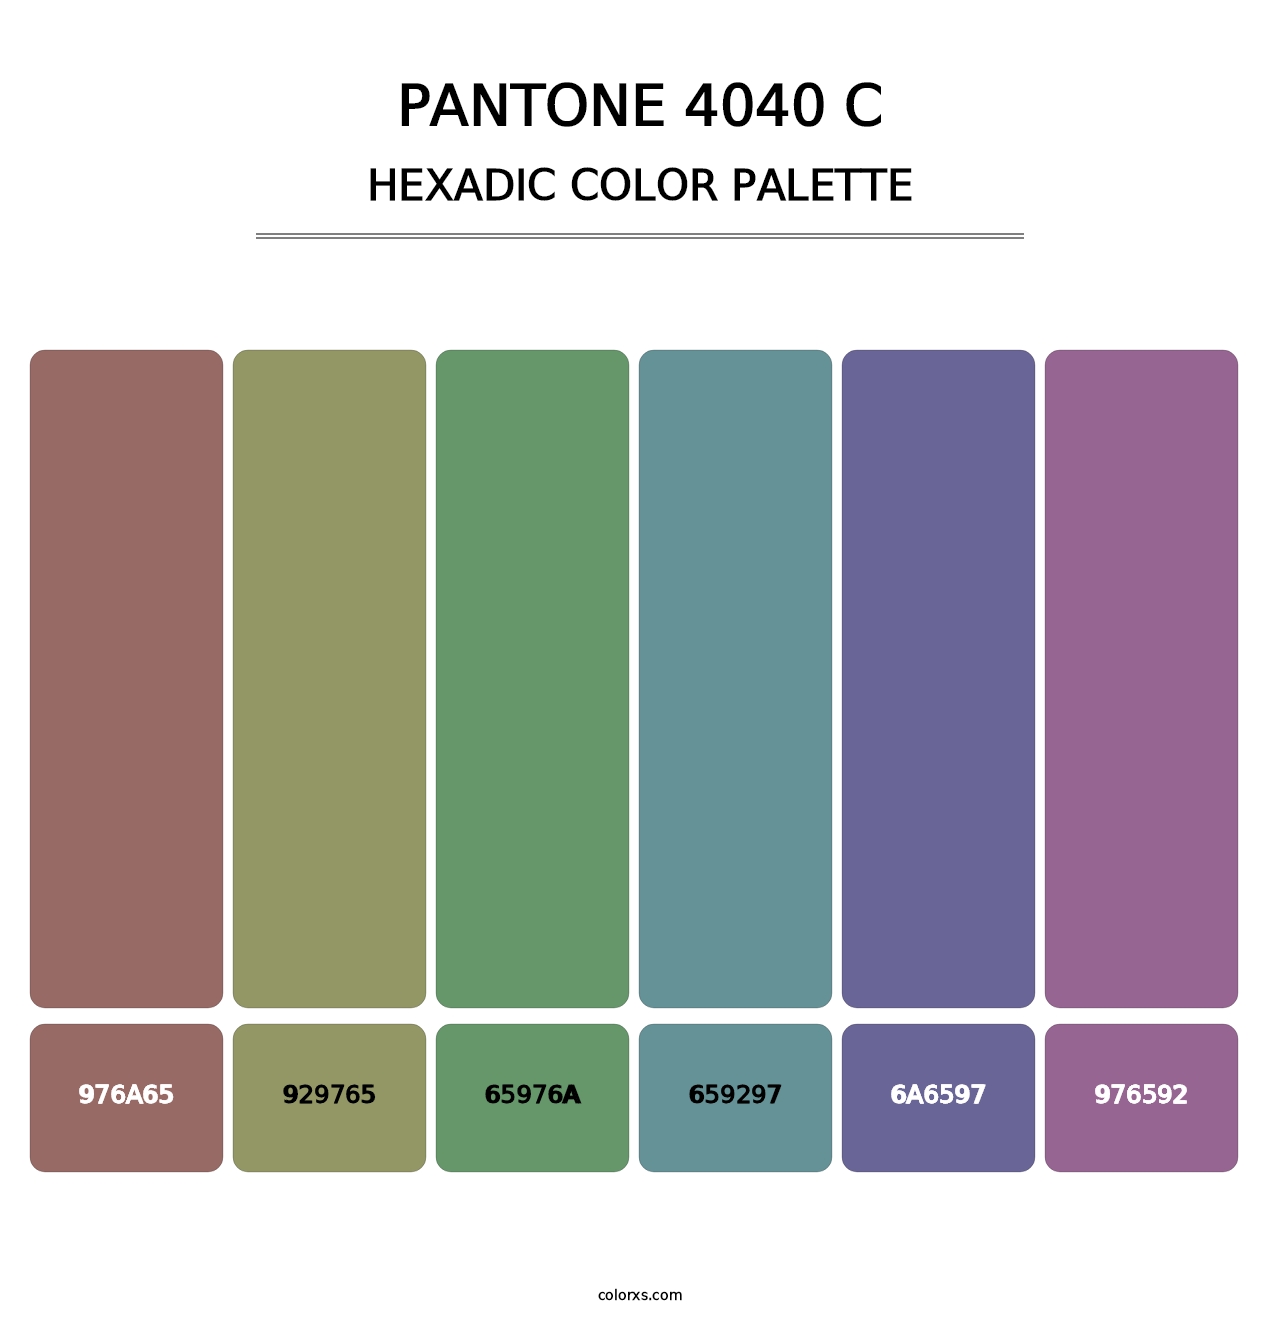 PANTONE 4040 C - Hexadic Color Palette